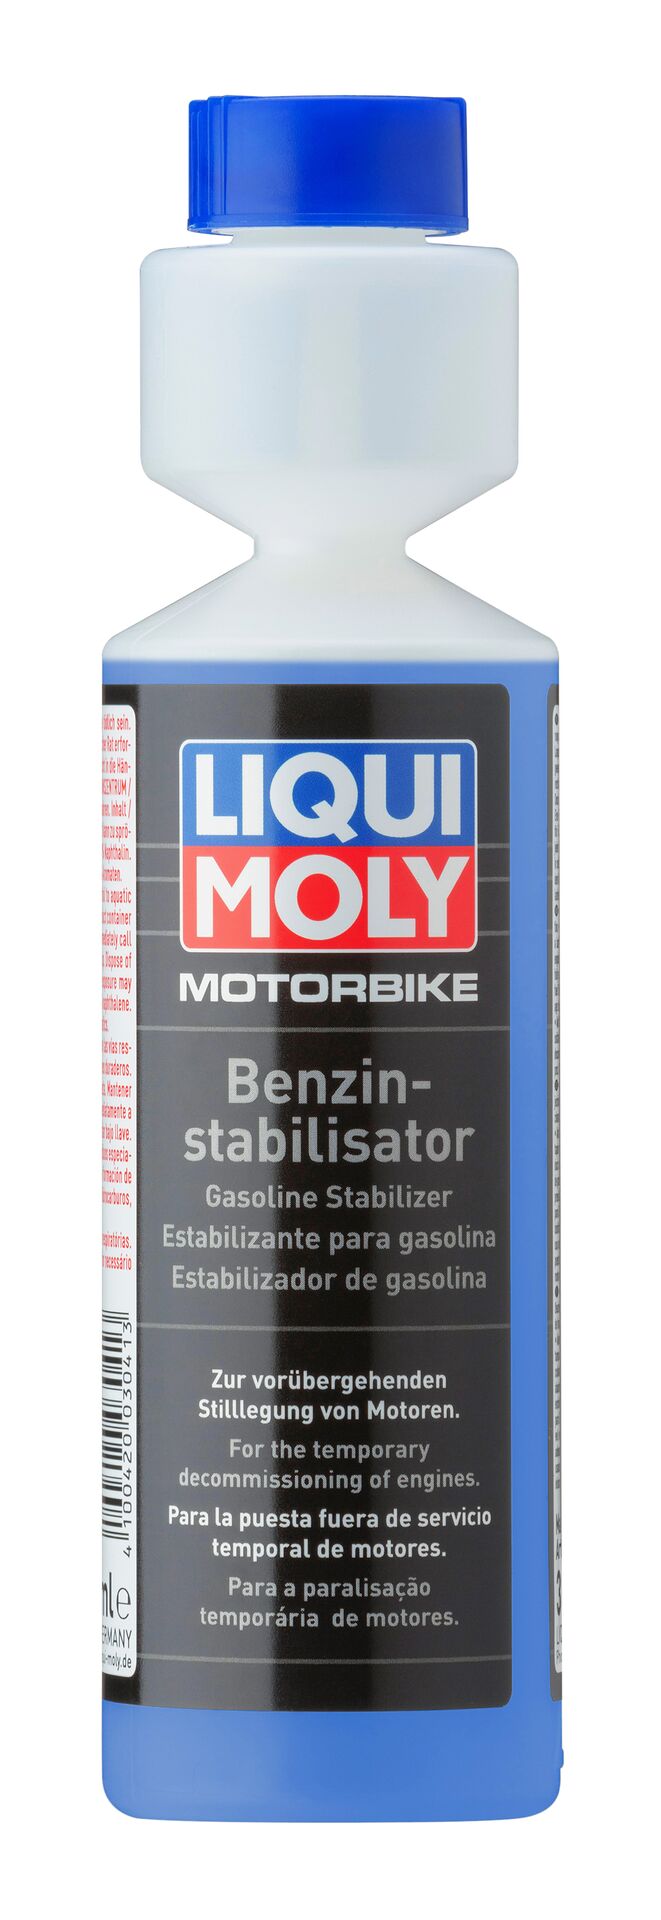 LIQUI MOLY Motorbike Benzin-Stabilisator Dosierflasche 2-/4-Takt 250 ml